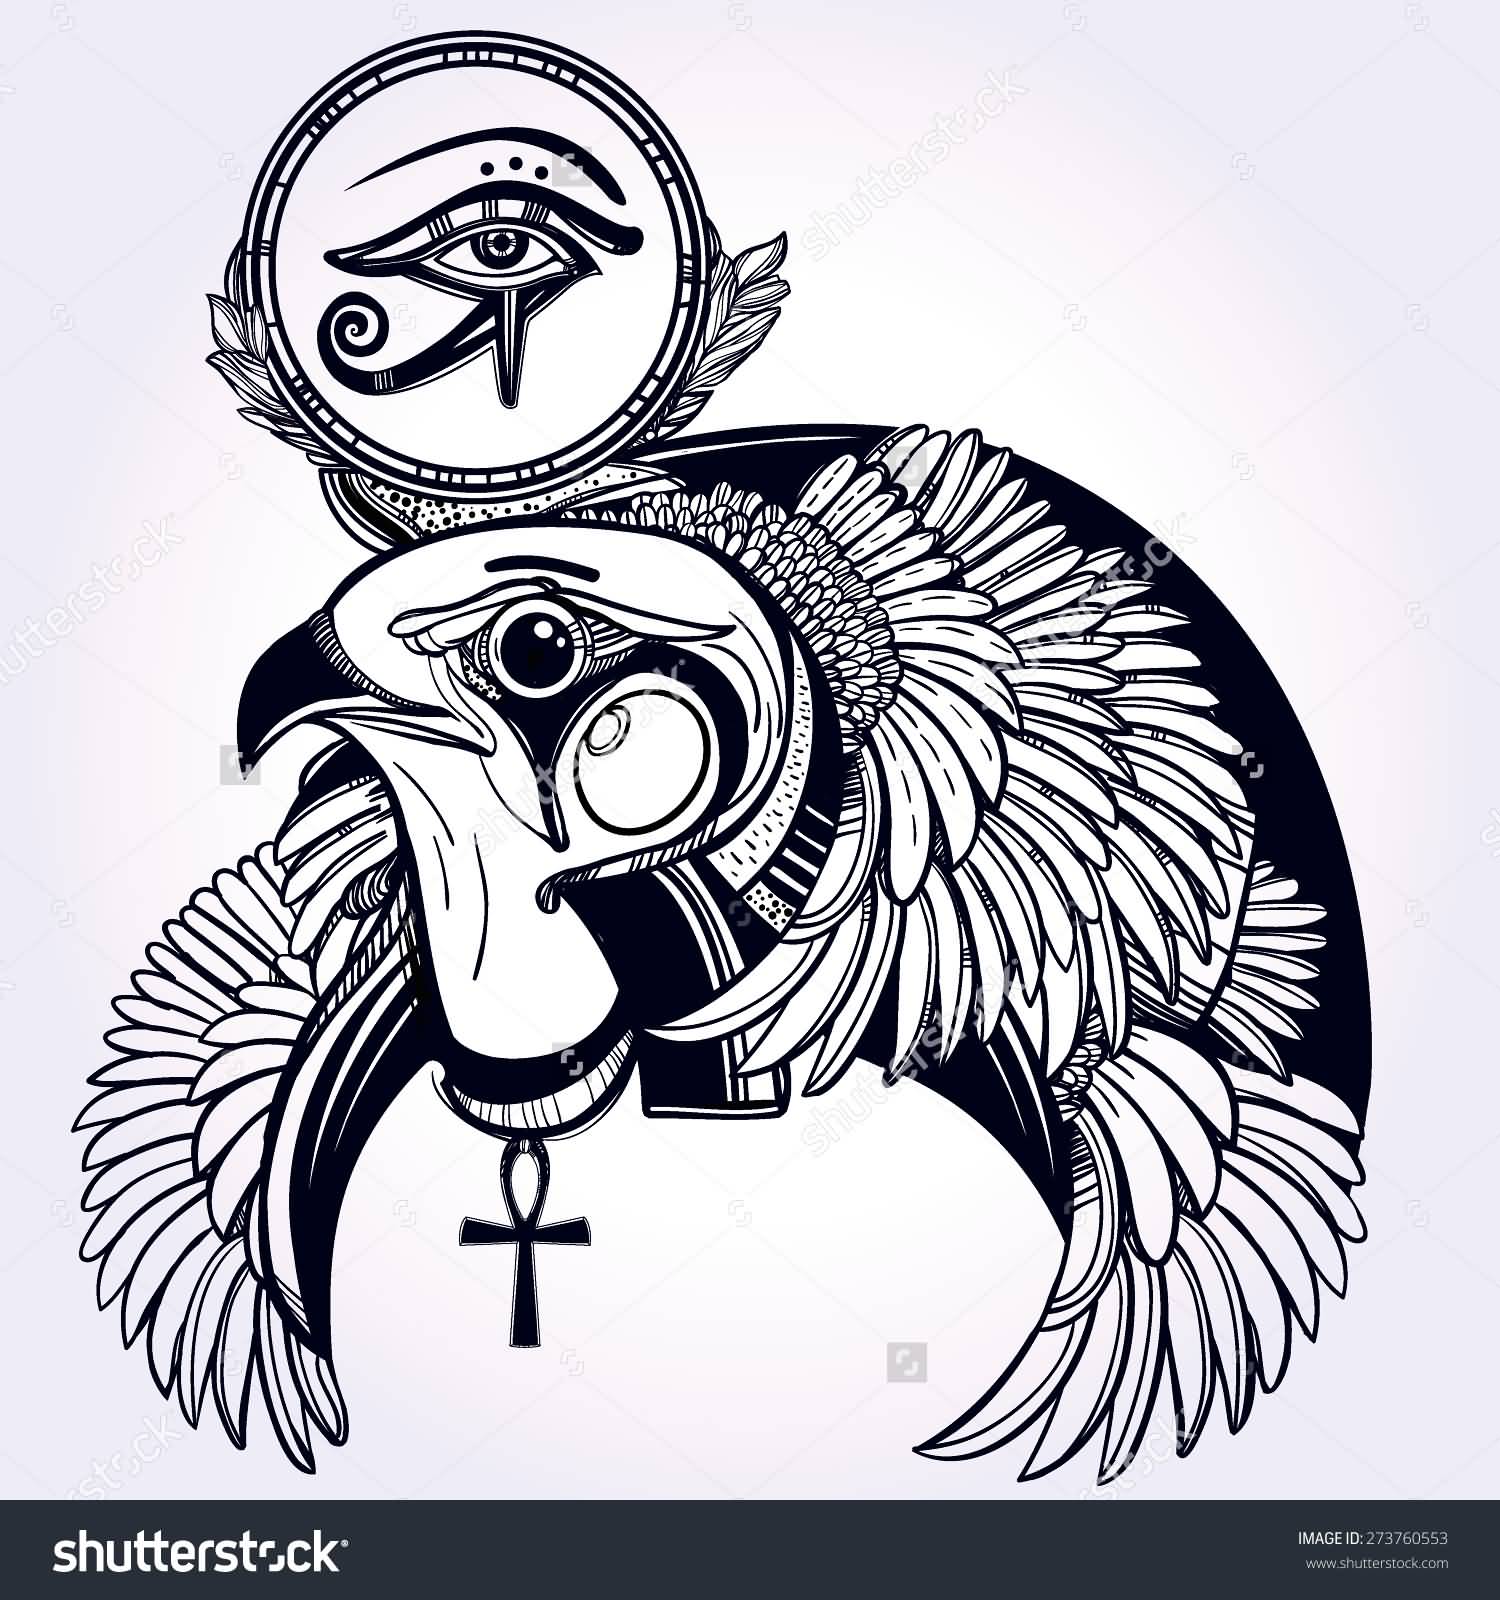 Amazing Vintage Hawk With Ankh And Horus Eye Tattoo Stencil